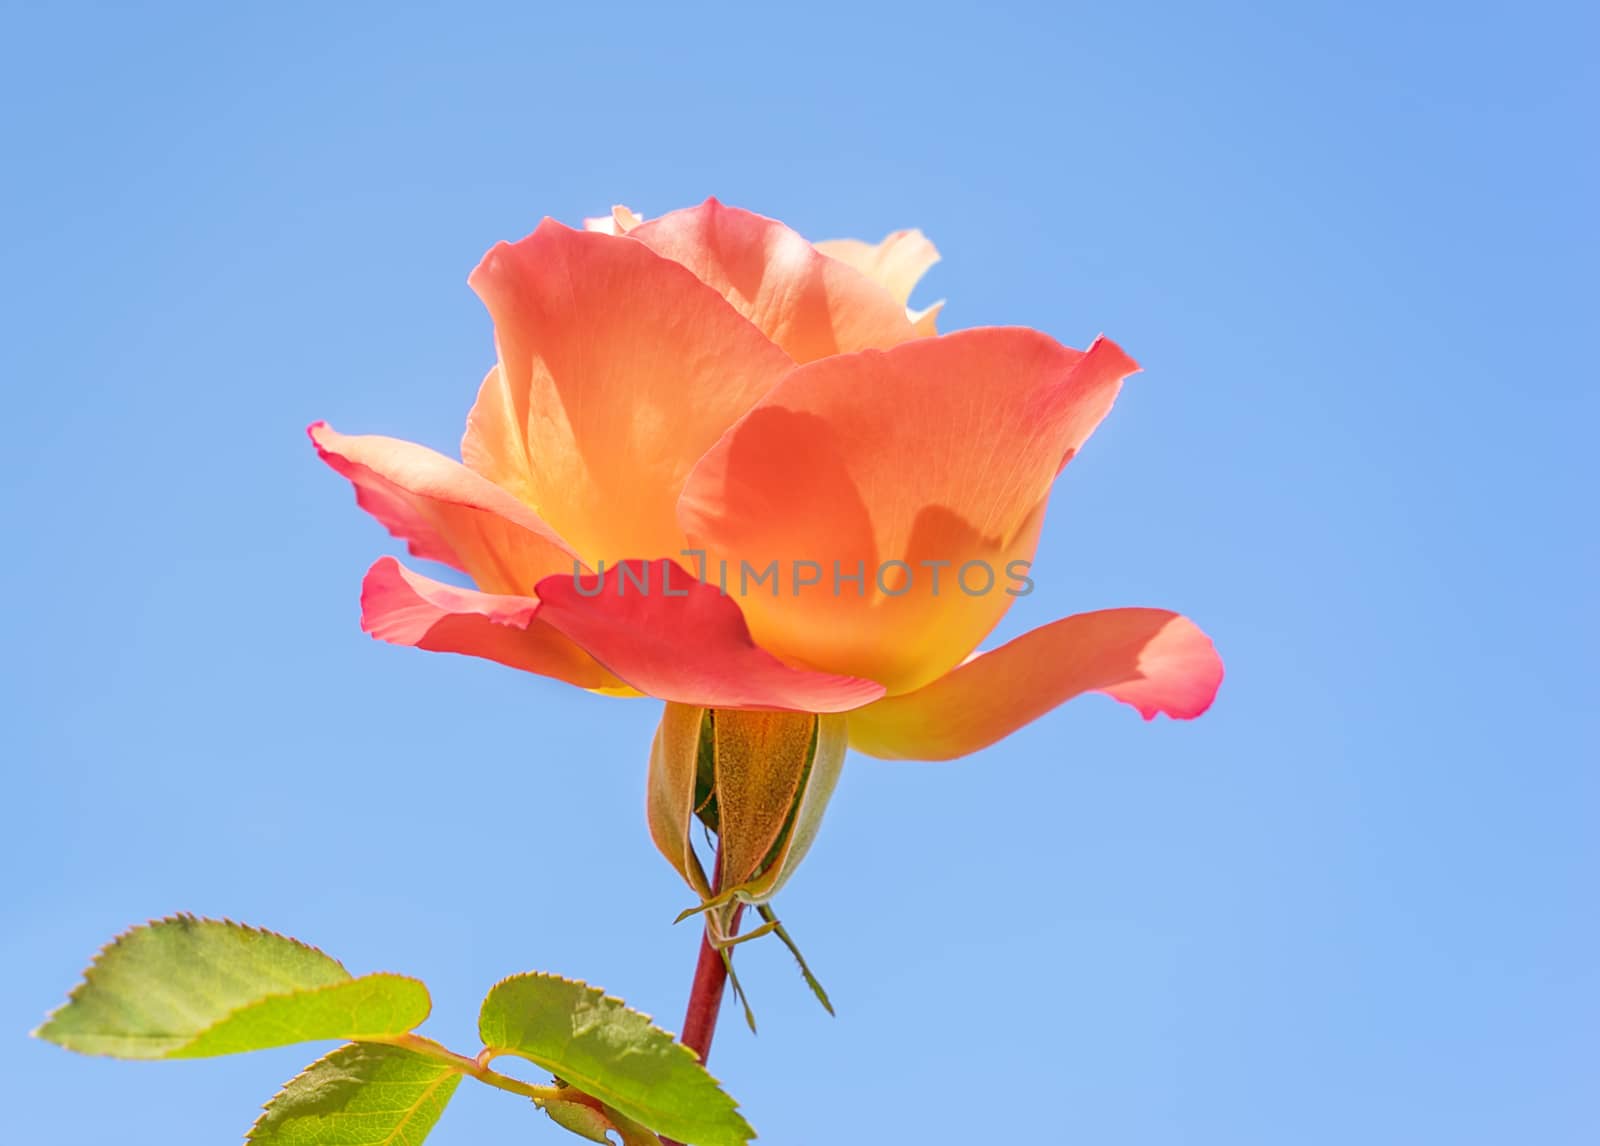 Spring time rose flower against clear blue sky background